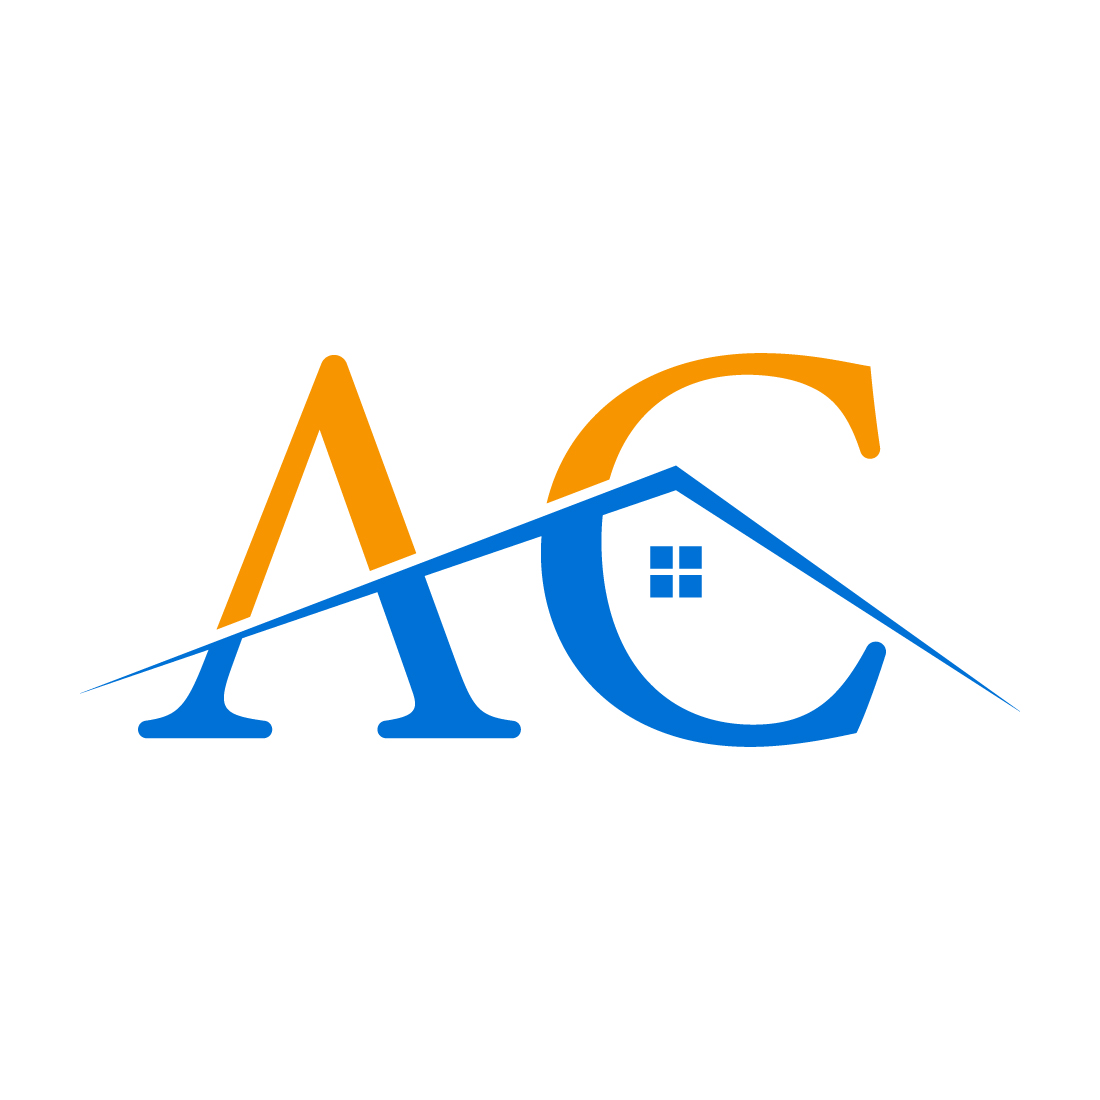 Initial AC Letter logo design, Vector design concept preview image.